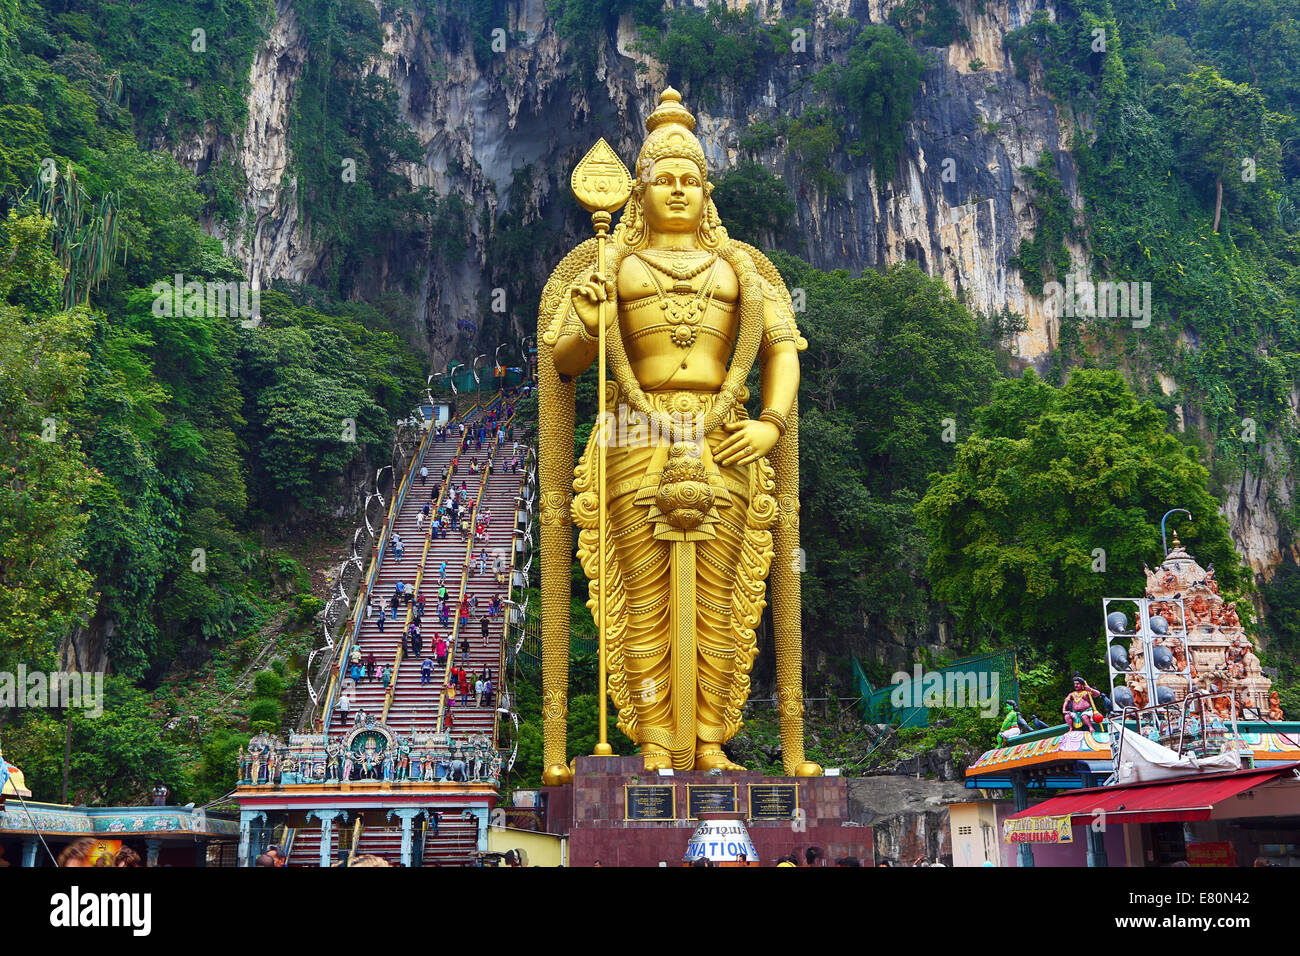 Giant golden statue of the god Murugan at the entrance of the Batu Caves, a Hindu shrine in Kuala Lumpur, Malaysia Stock Photo